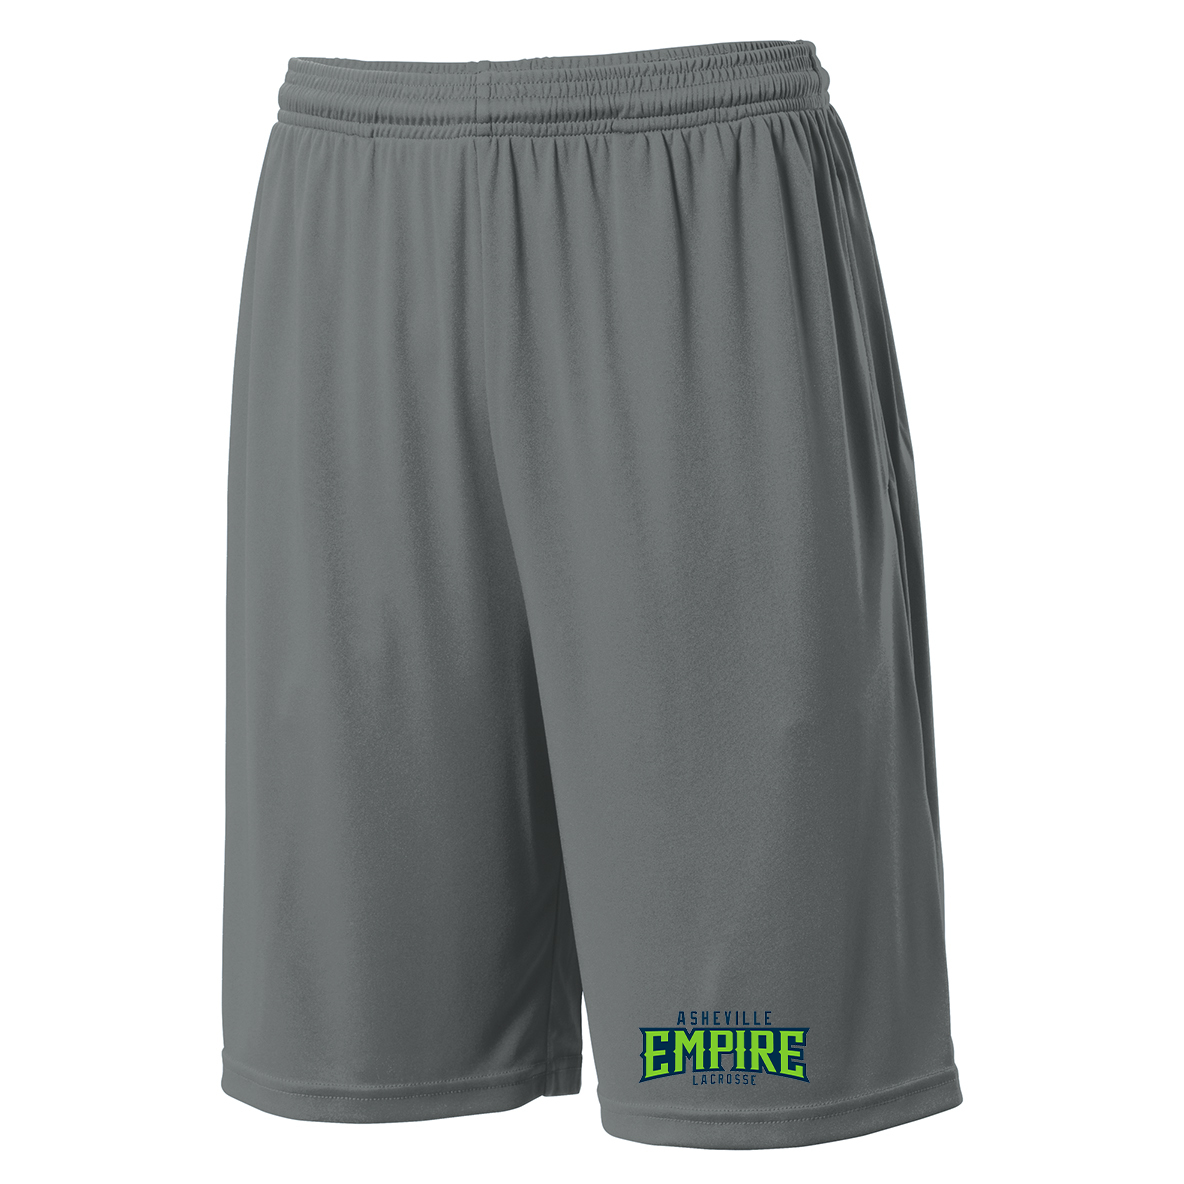 Asheville Empire Lacrosse Shorts